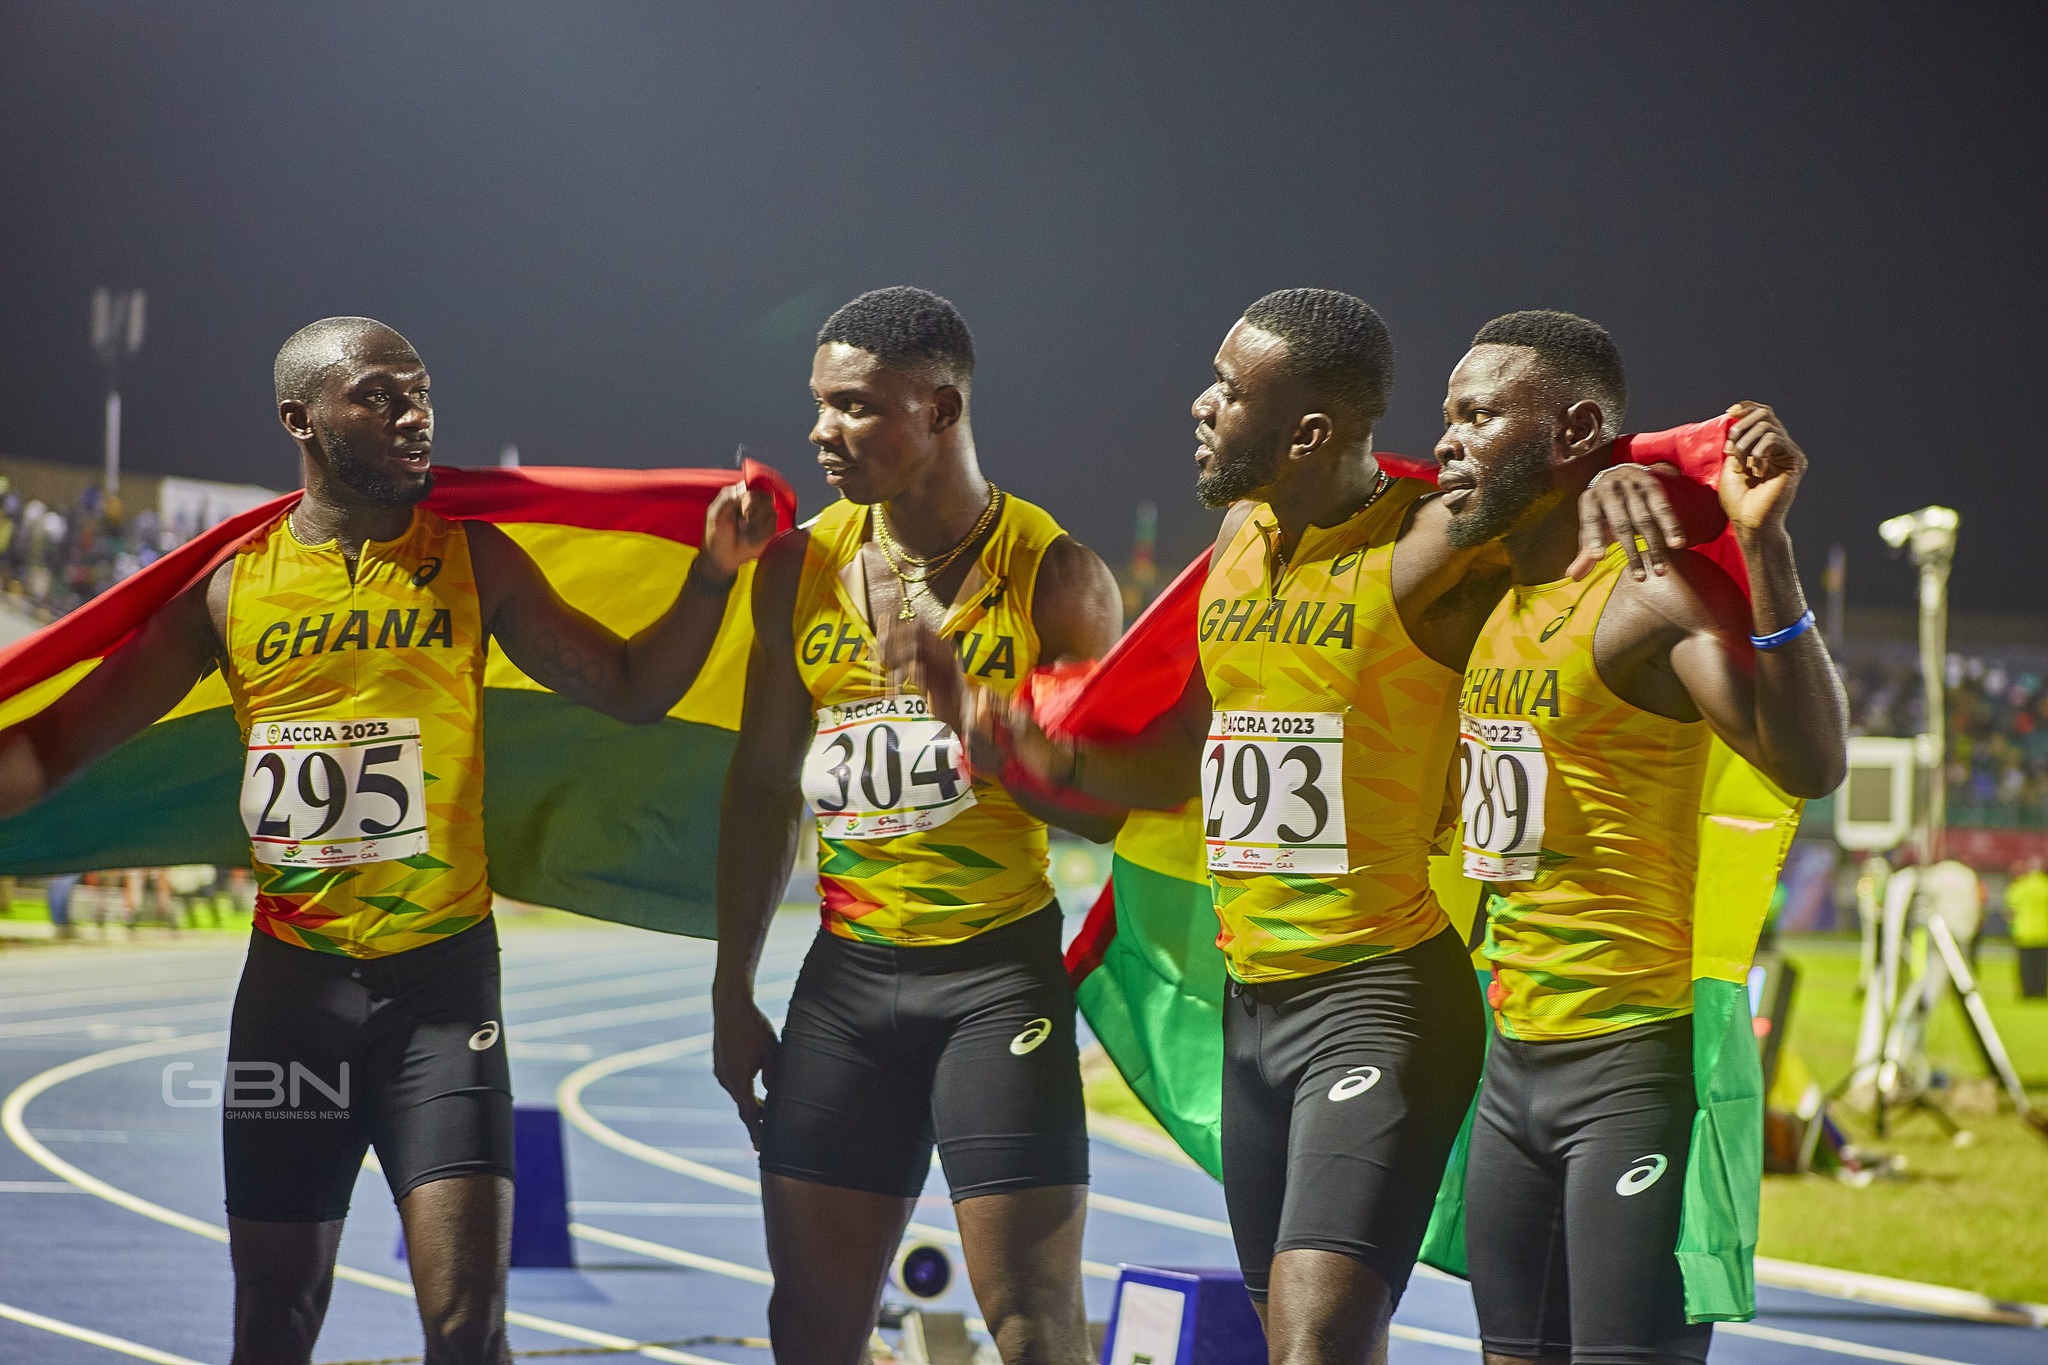 Ghana men’s quartet qualifies for Paris 2024 Olympics